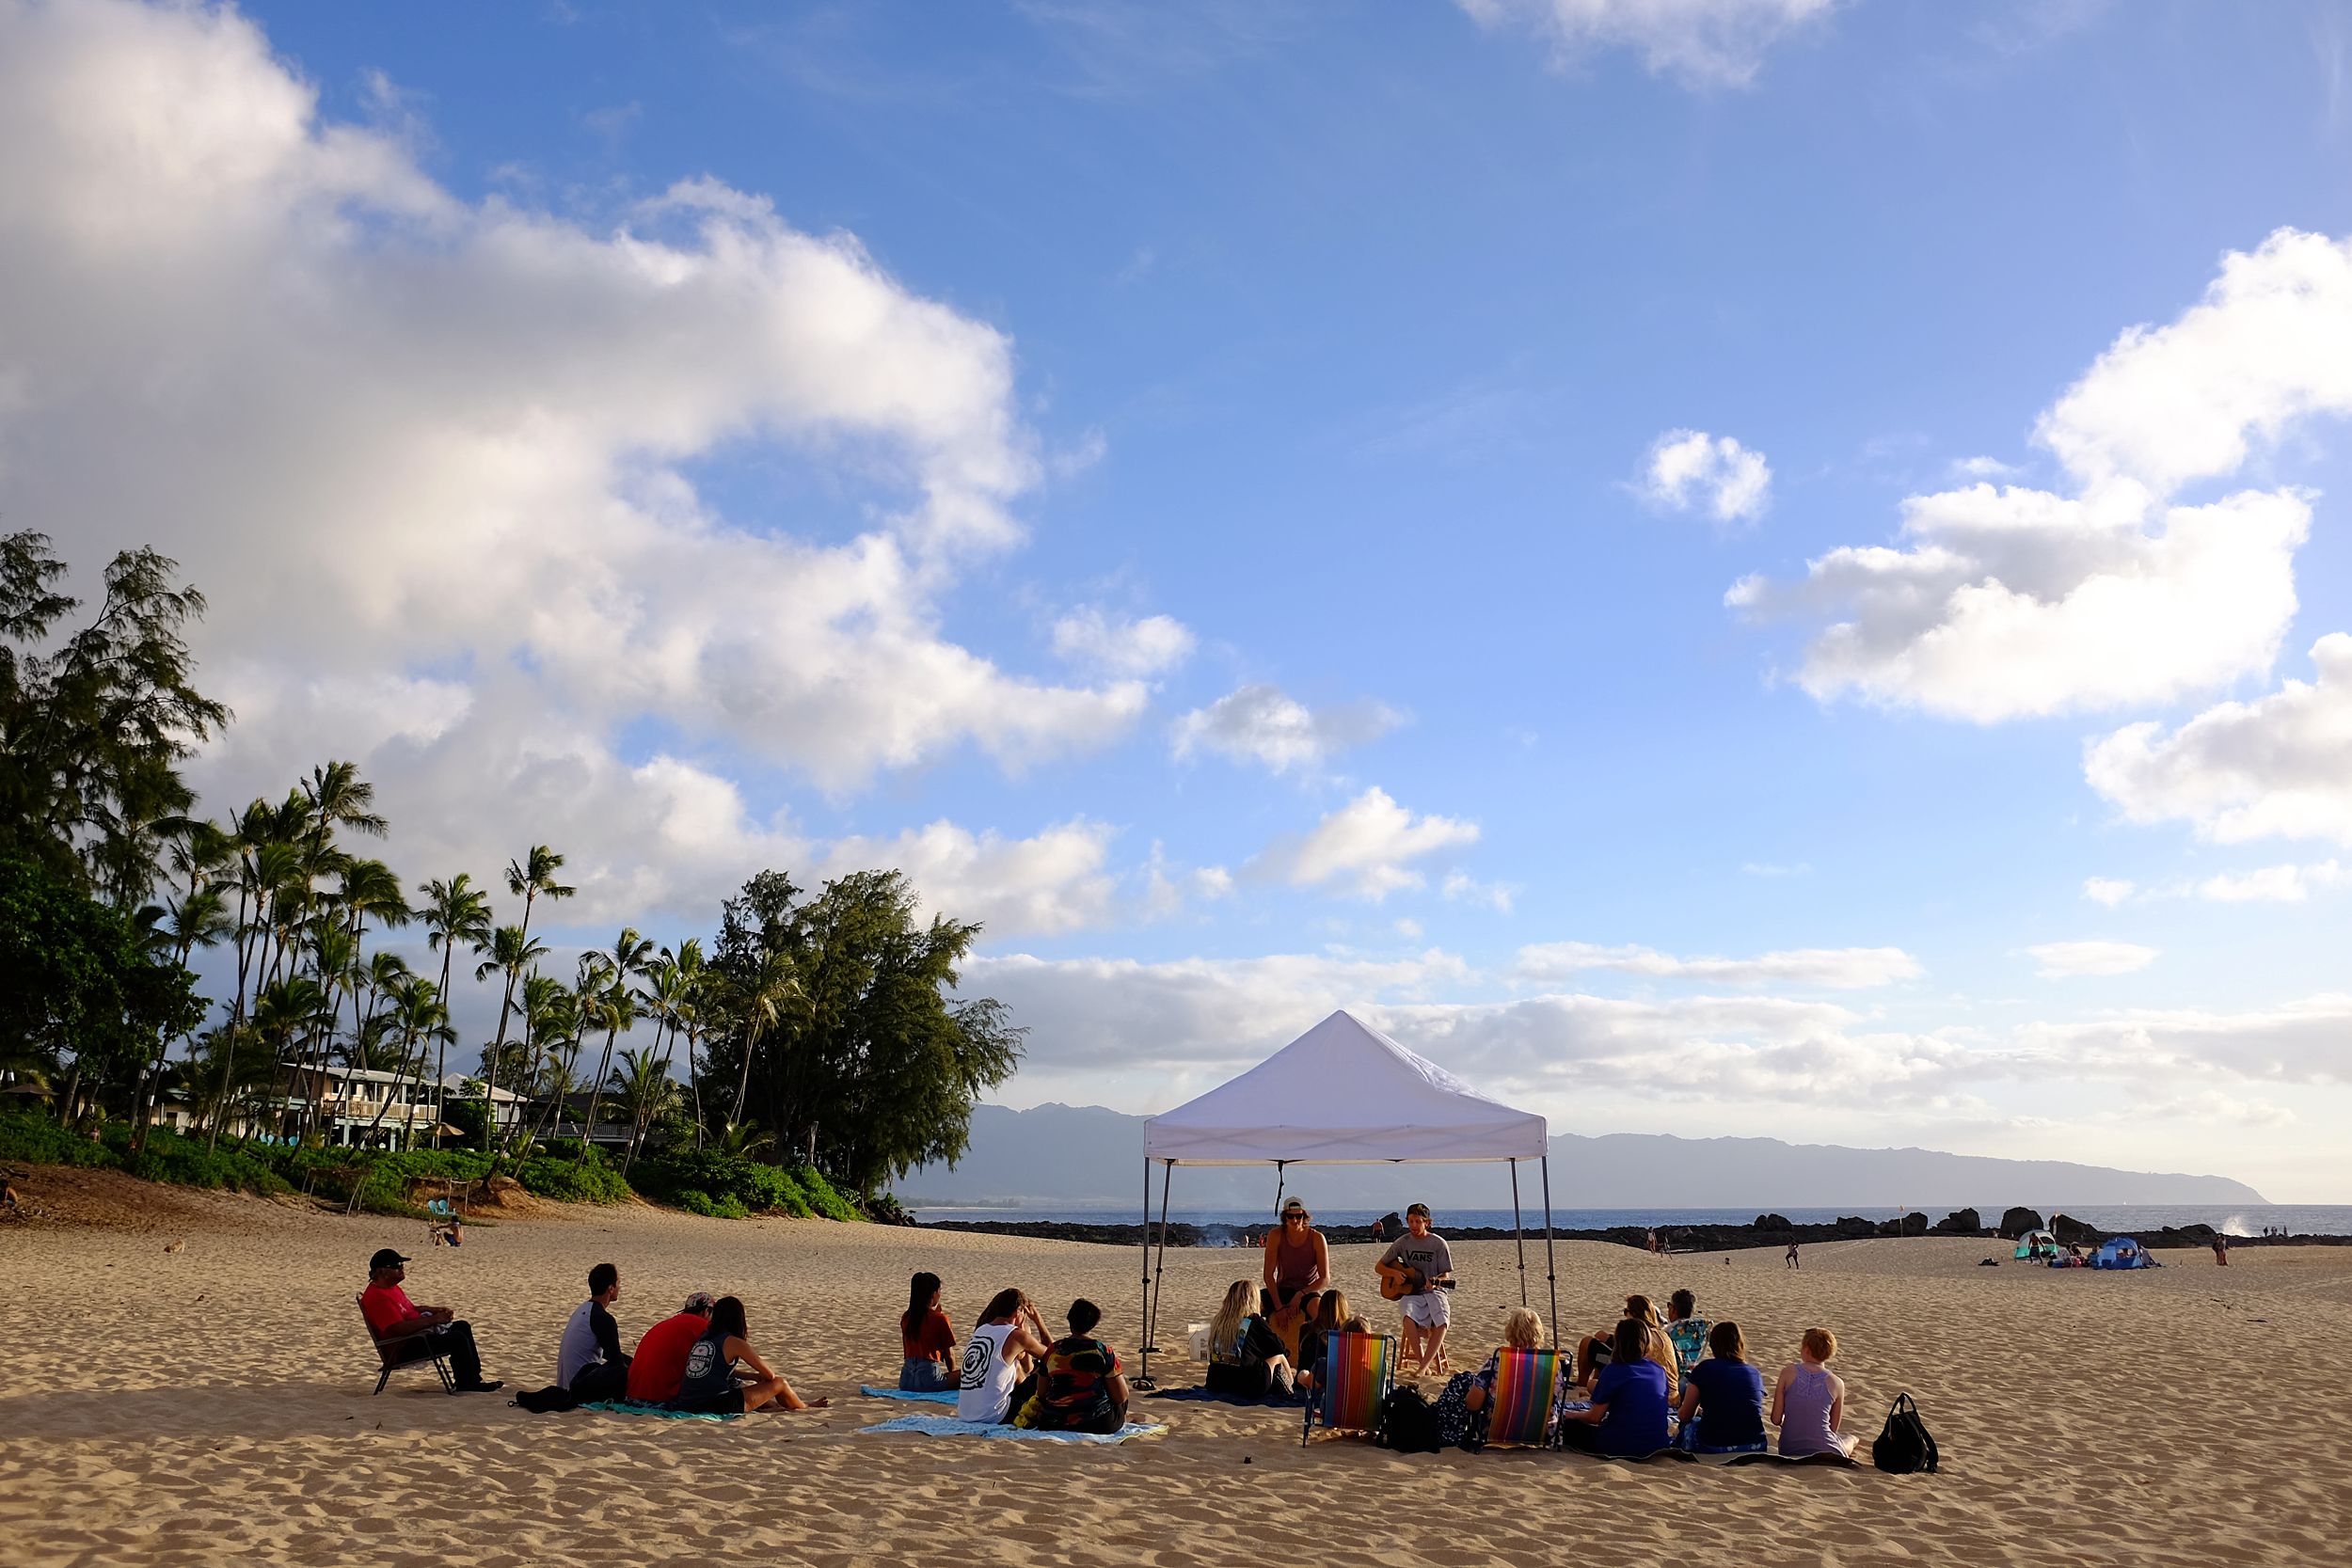  Our Hawaii Life - August & September Journal 